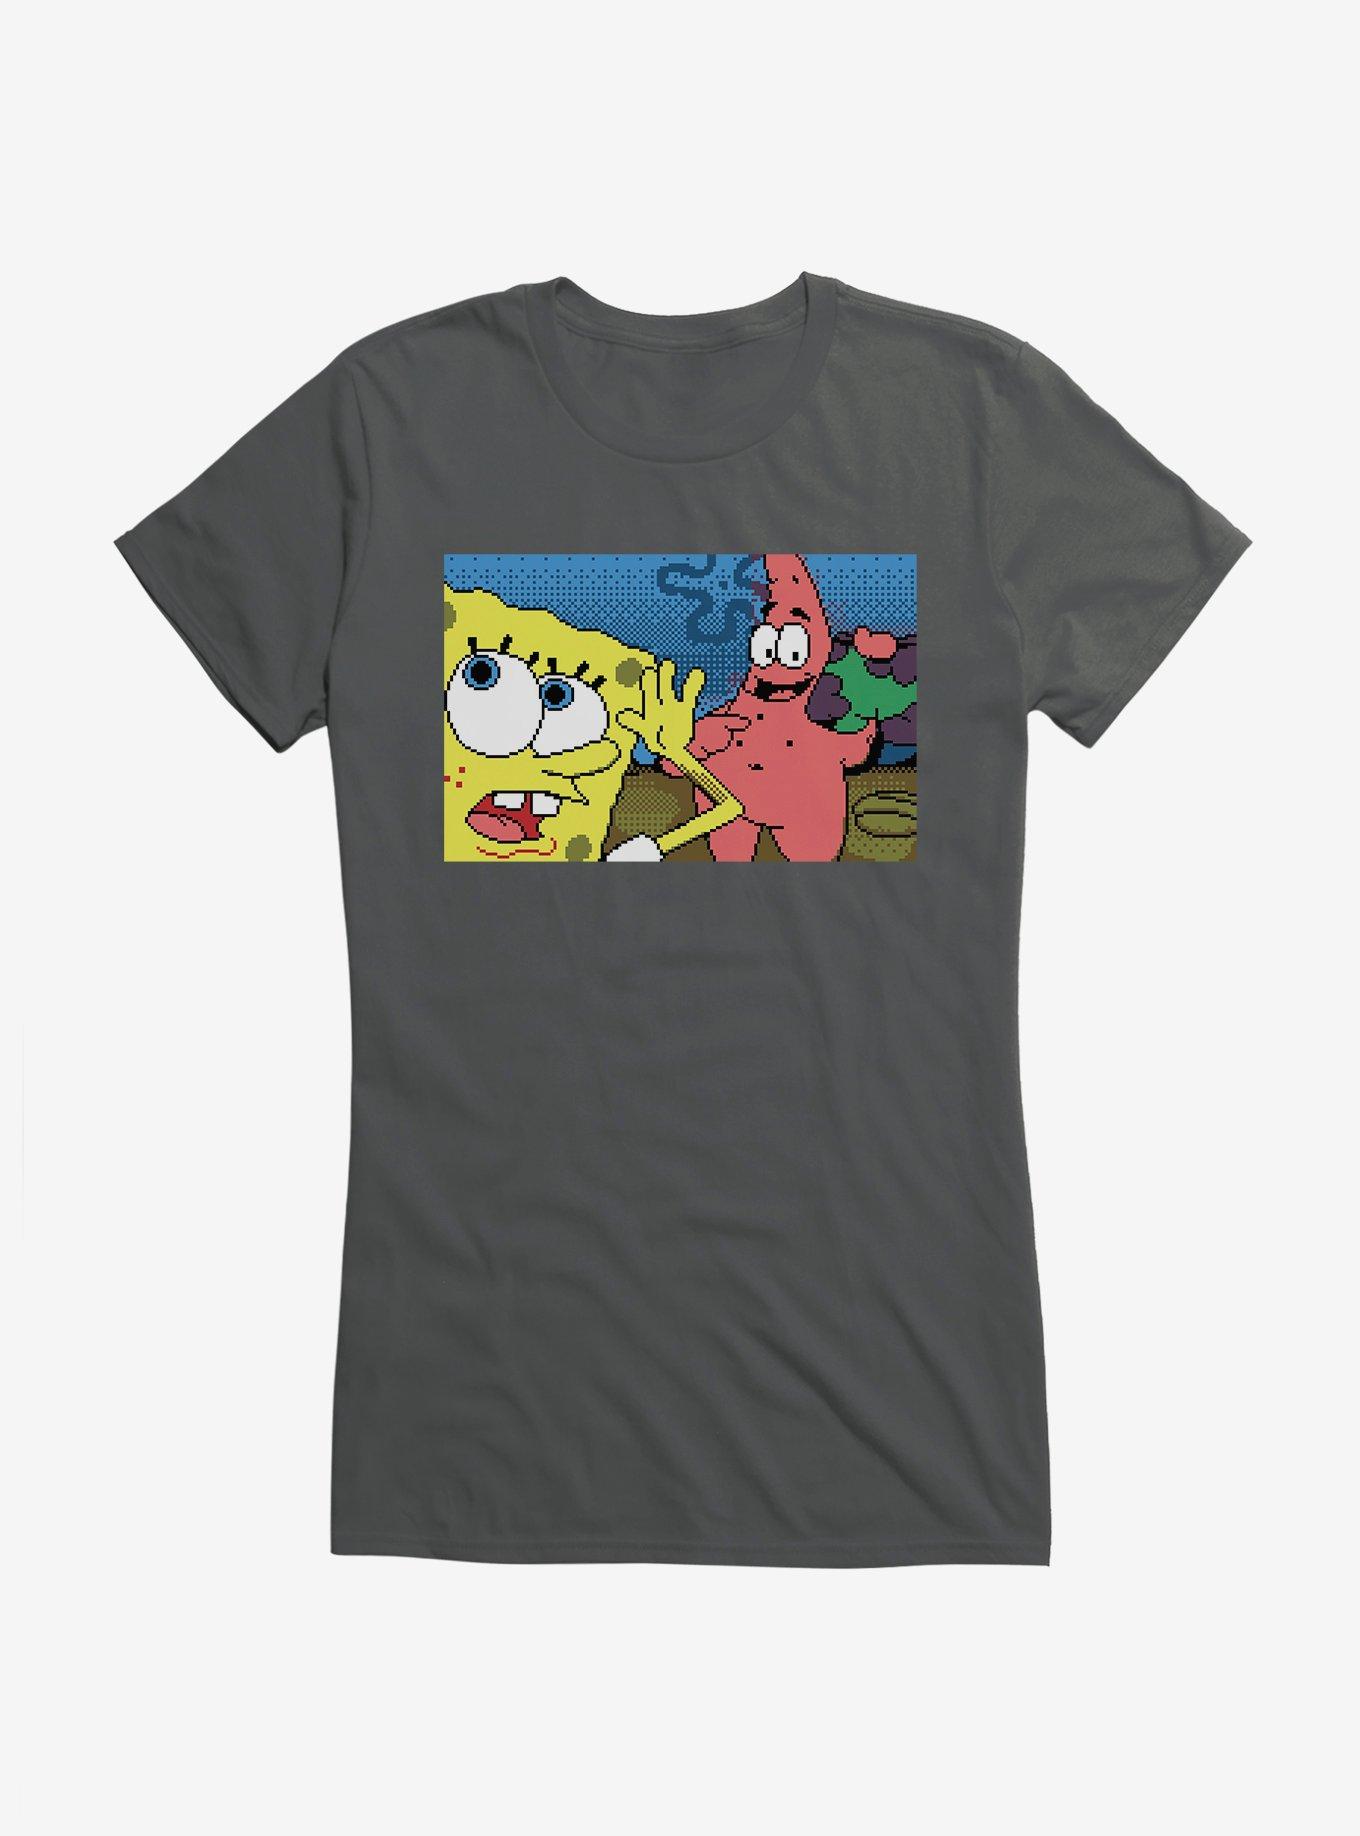 SpongeBob SquarePants Patrick Pants Off Girls T-Shirt